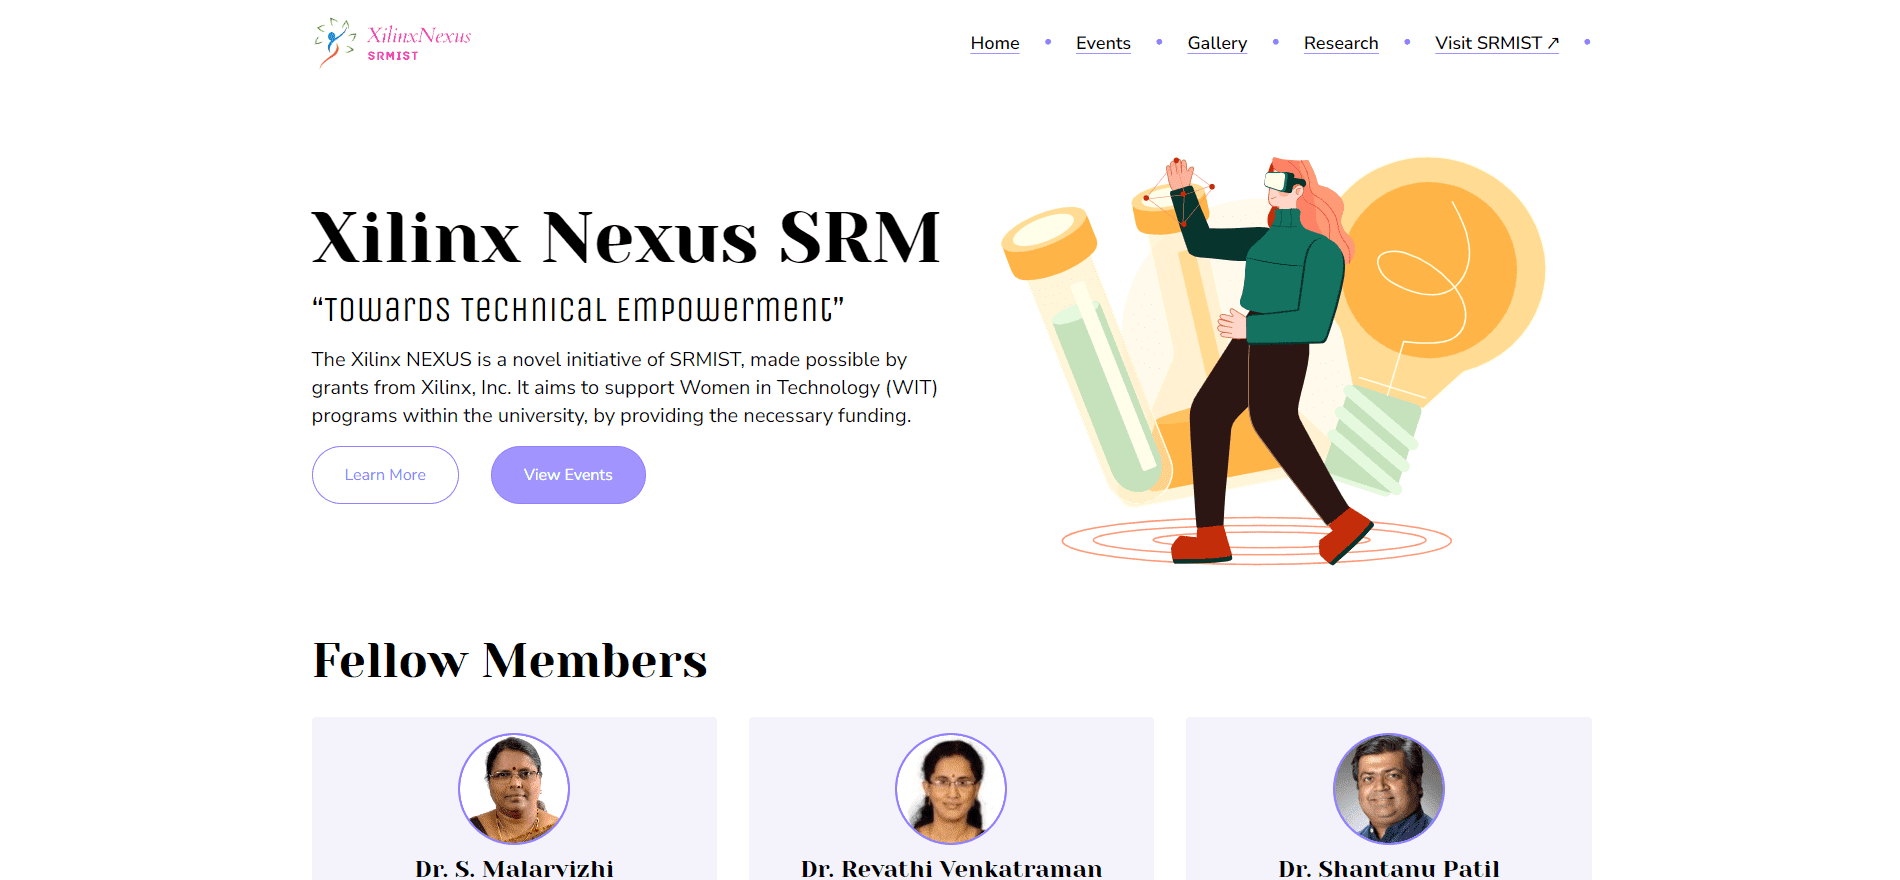 Xilinx Nexus SRM